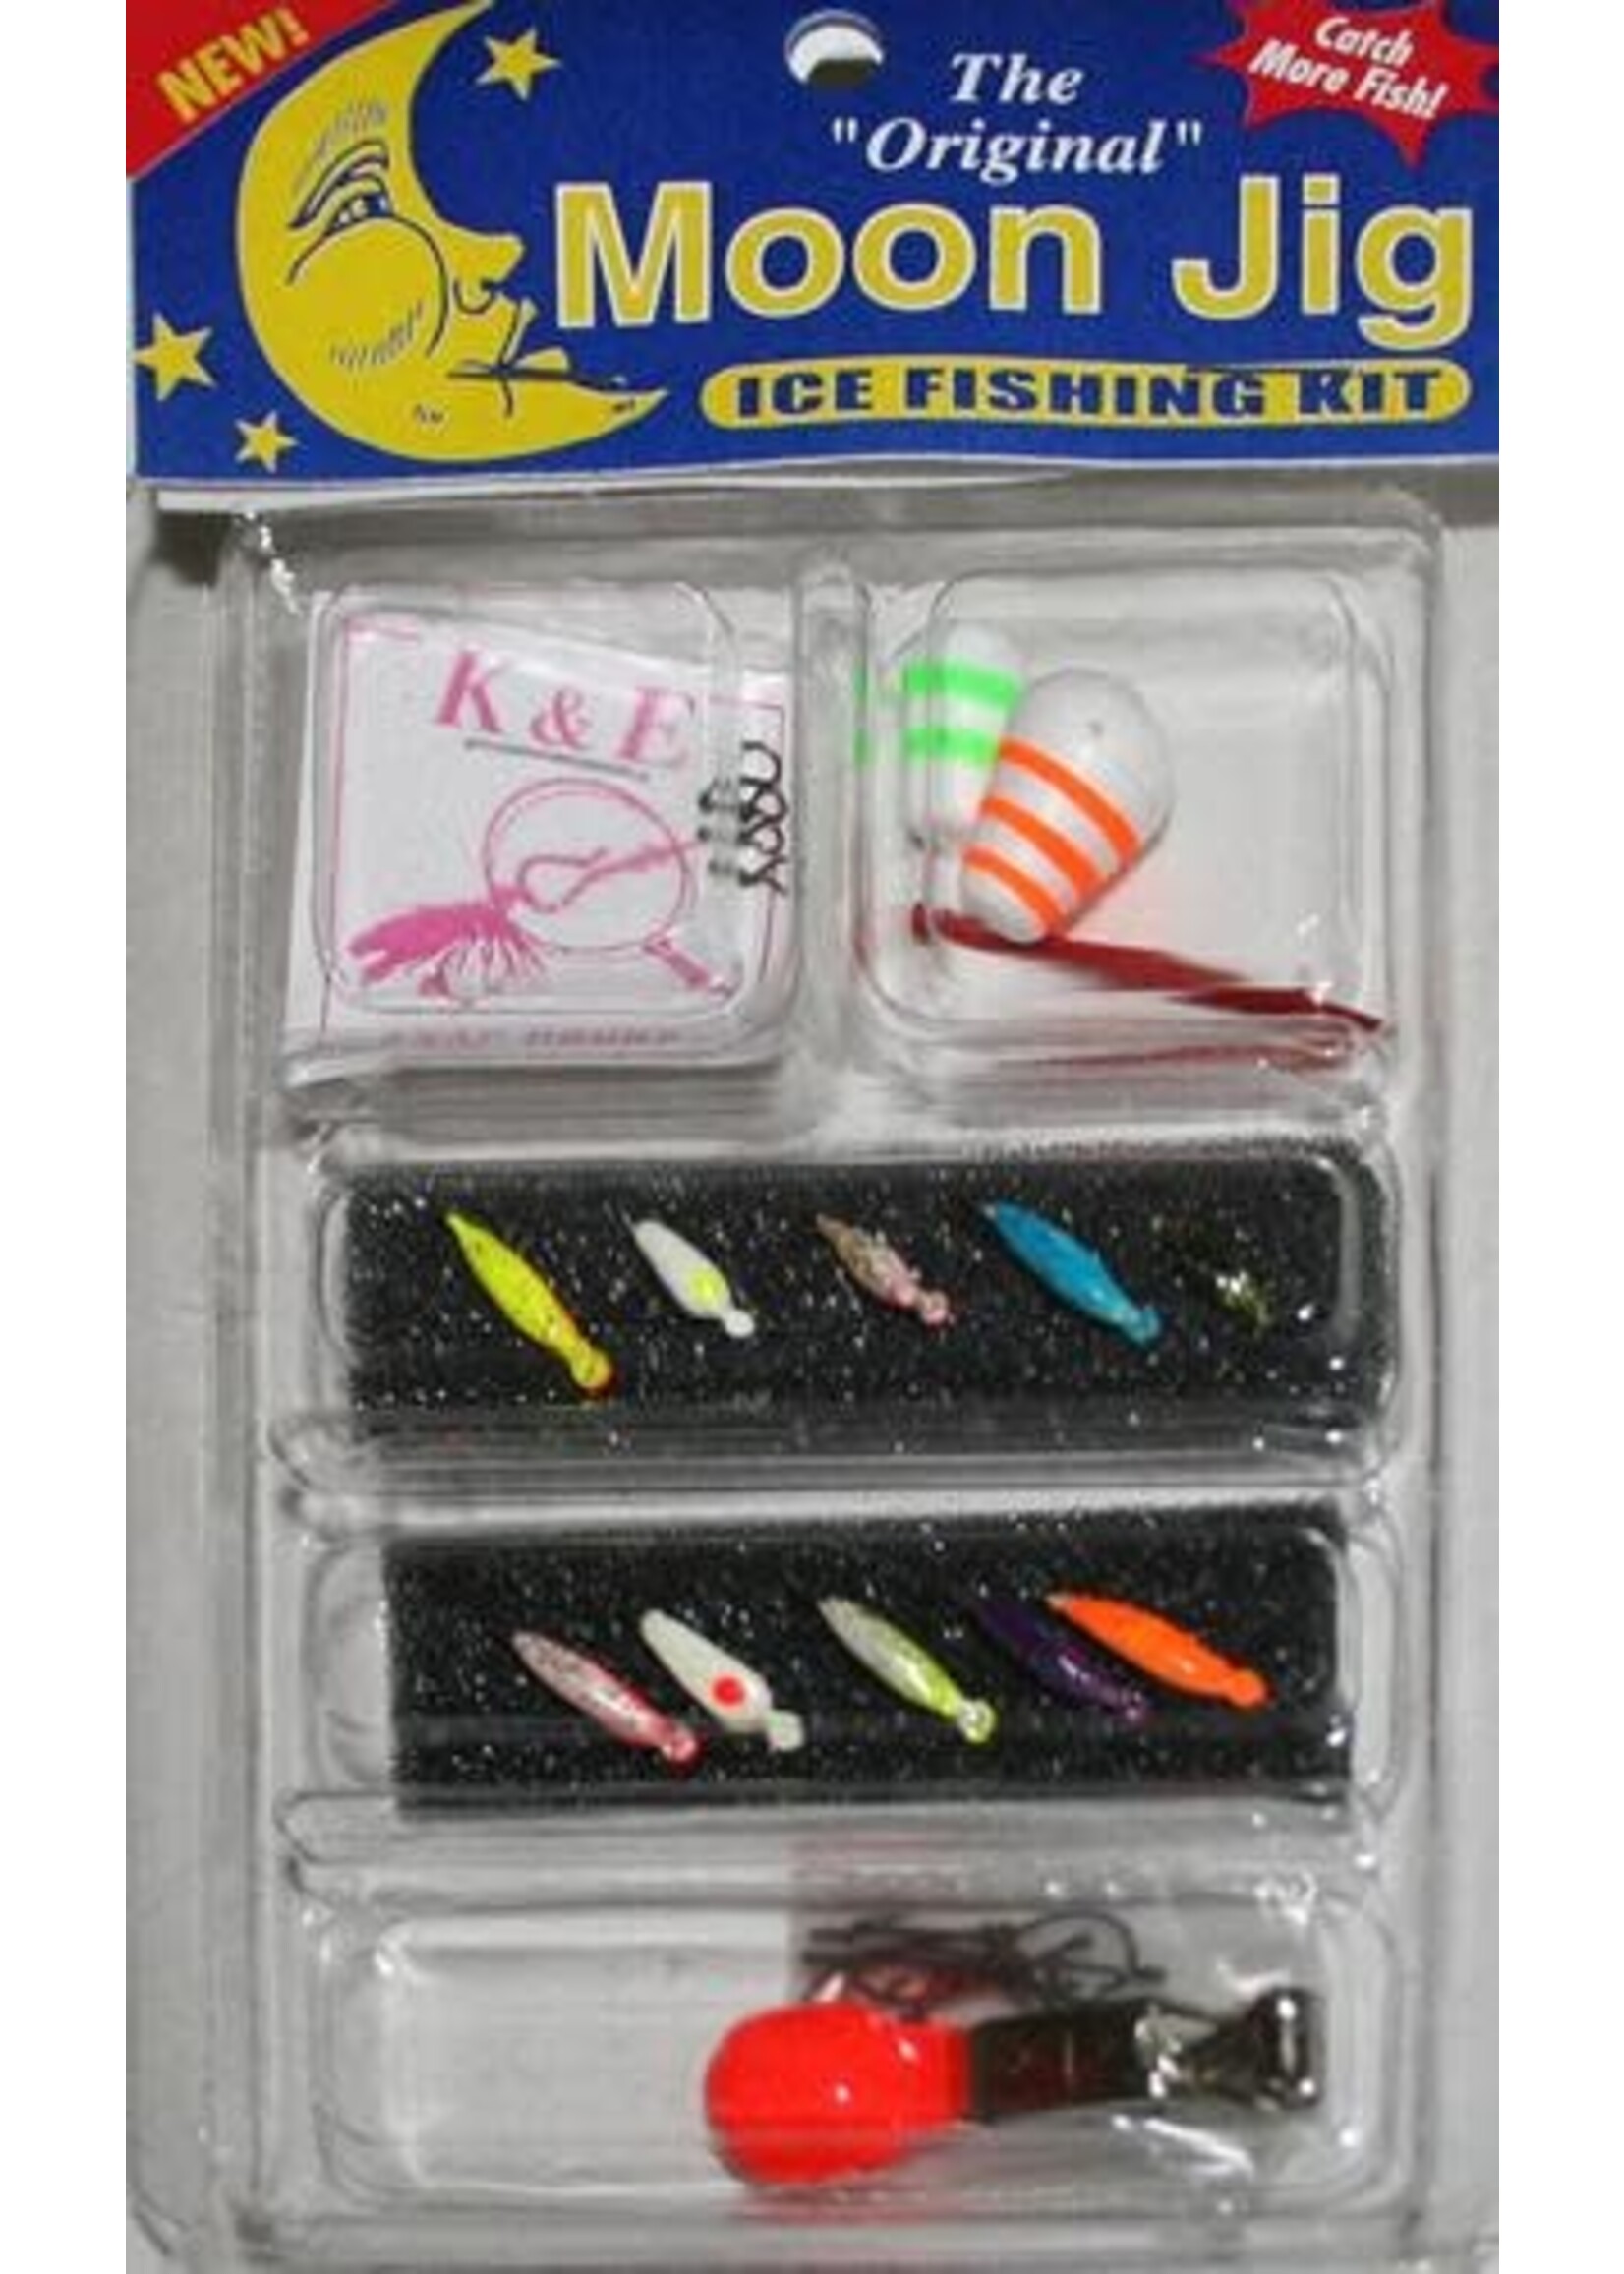 https://cdn.shoplightspeed.com/shops/626643/files/39639125/1652x2313x2/k-e-tackle-k-e-tackle-moon-jig-ice-fishing-kit.jpg